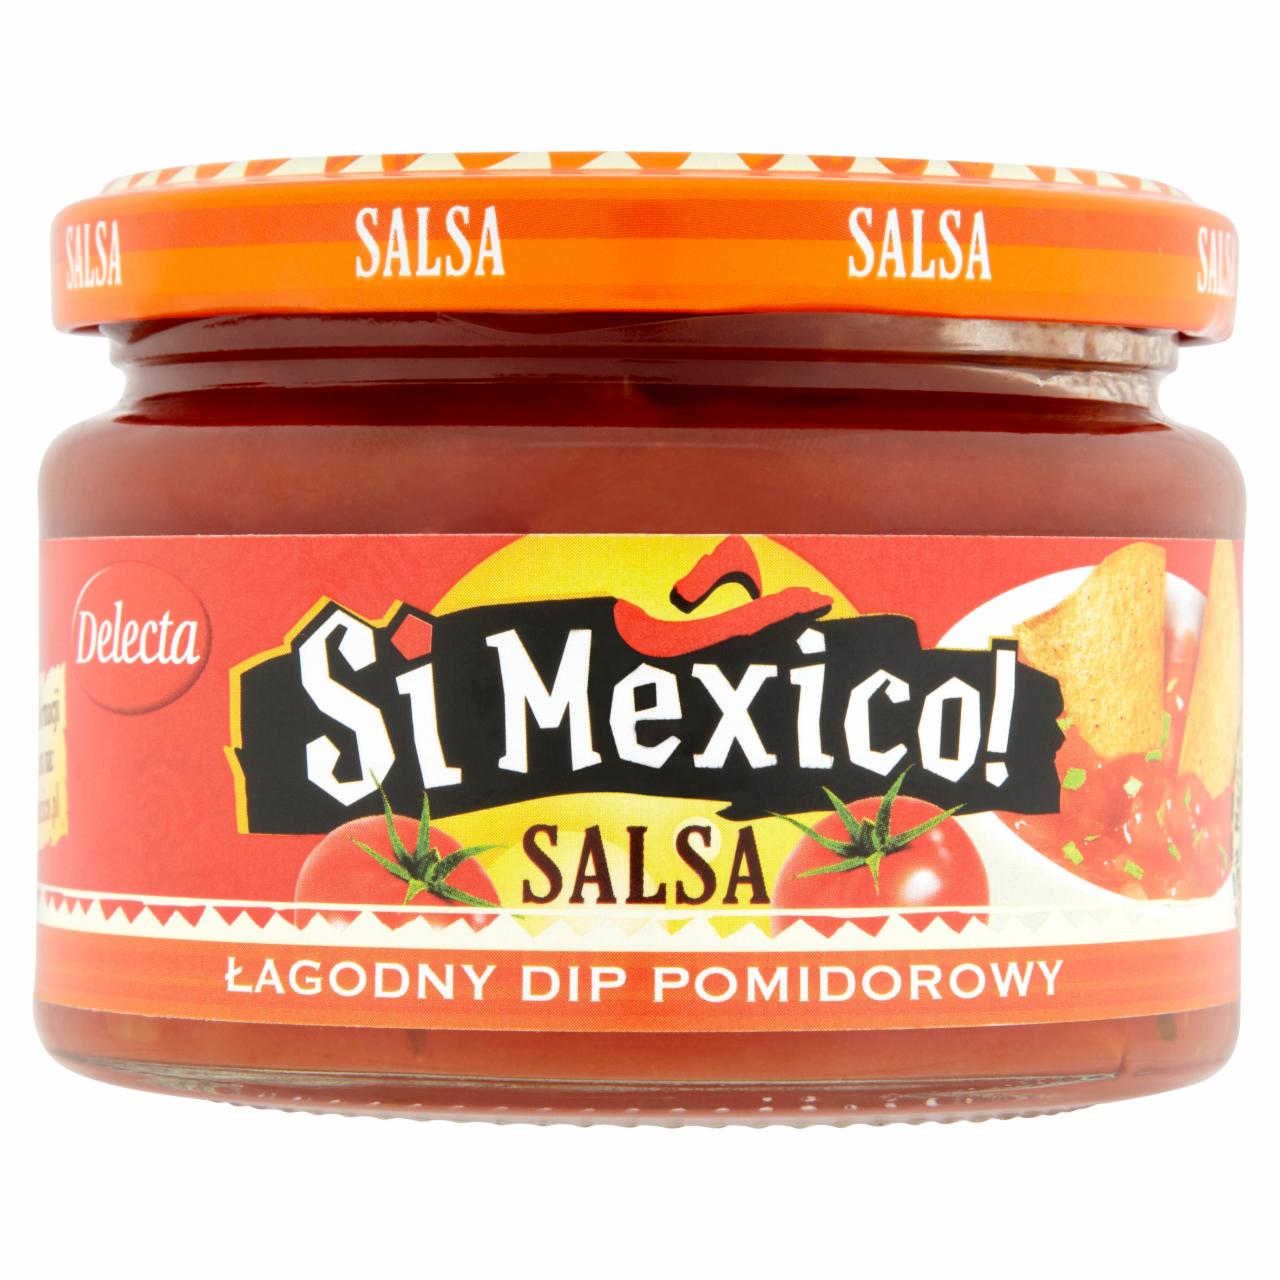 Zdjęcia - Delecta Si Mexico! Salsa Łagodny dip pomidorowy 260 g